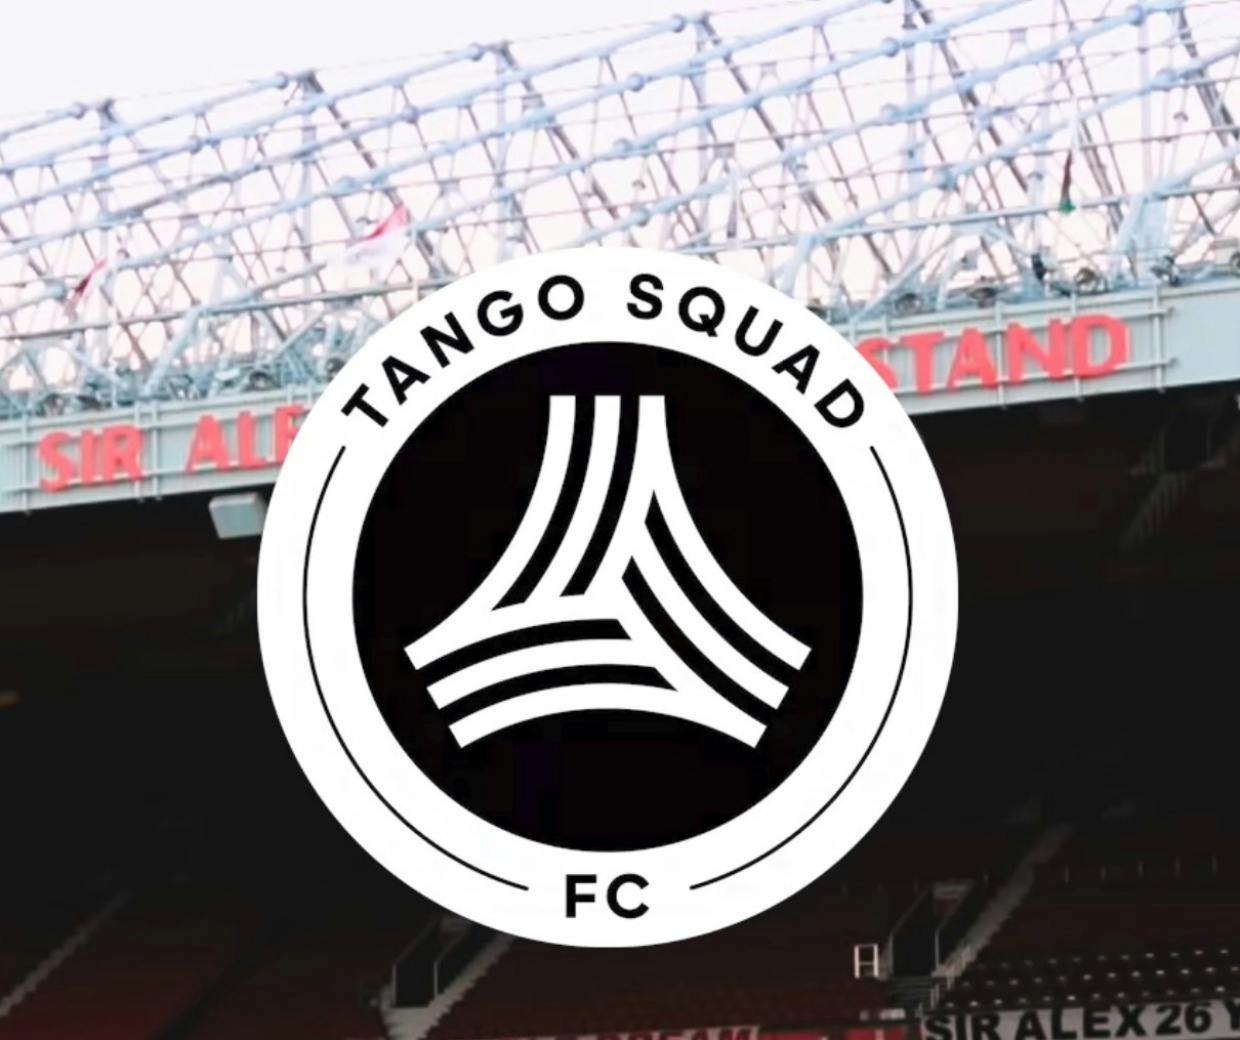 adidas tango squad fc